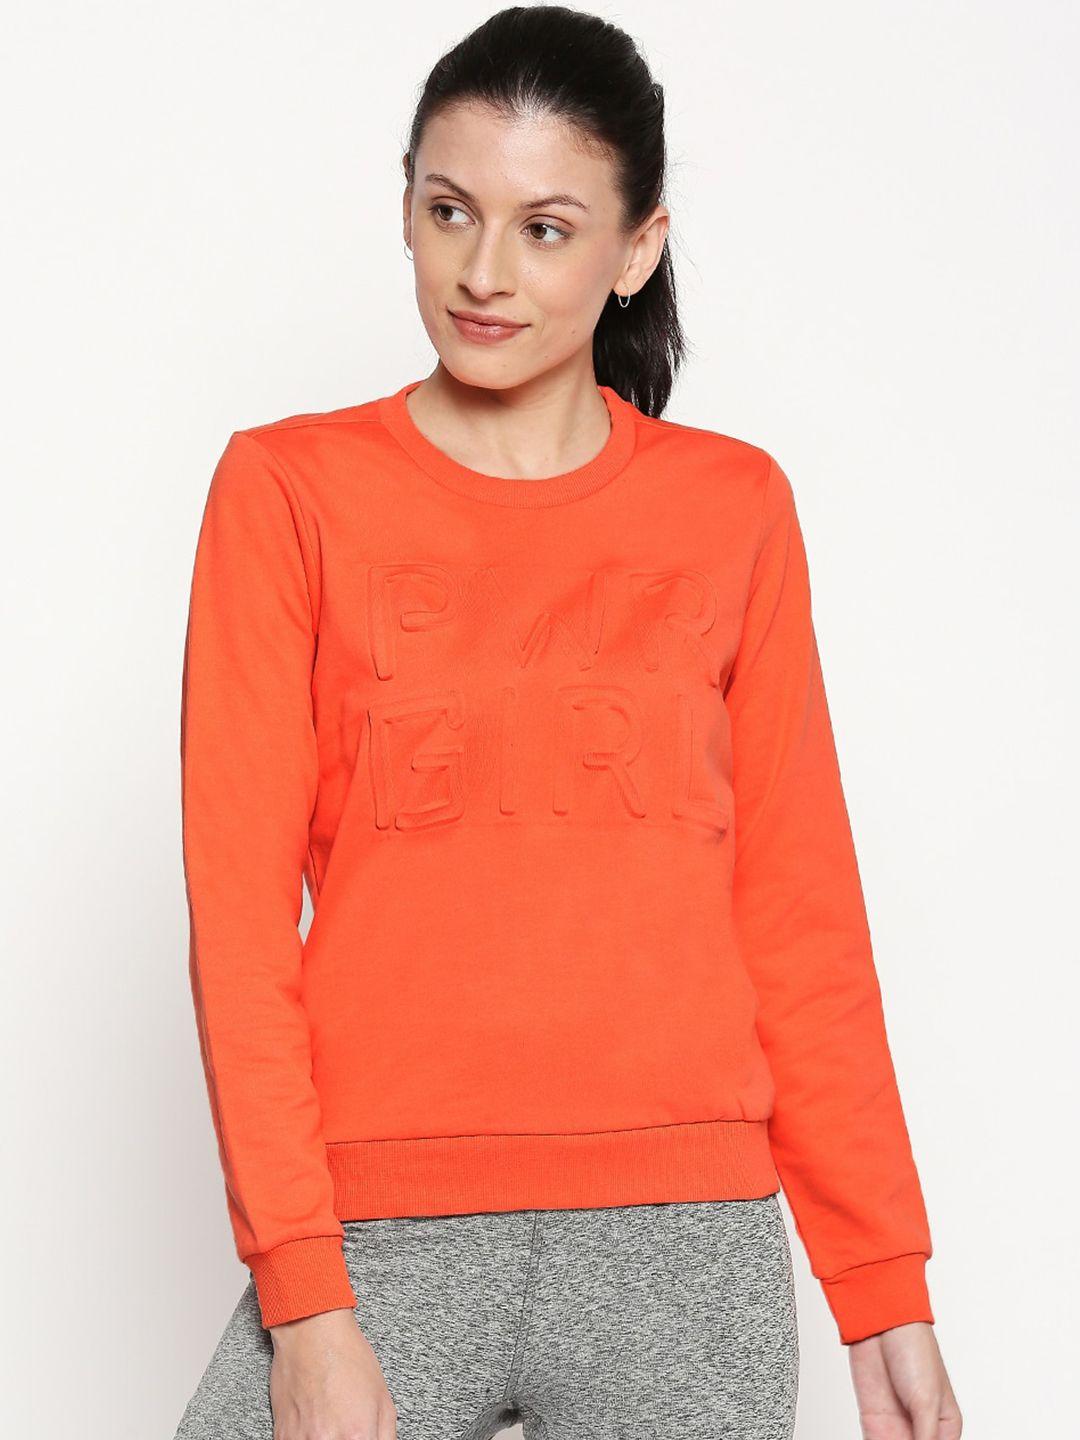 ajile-by-pantaloons-women-orange-solid-sweatshirt